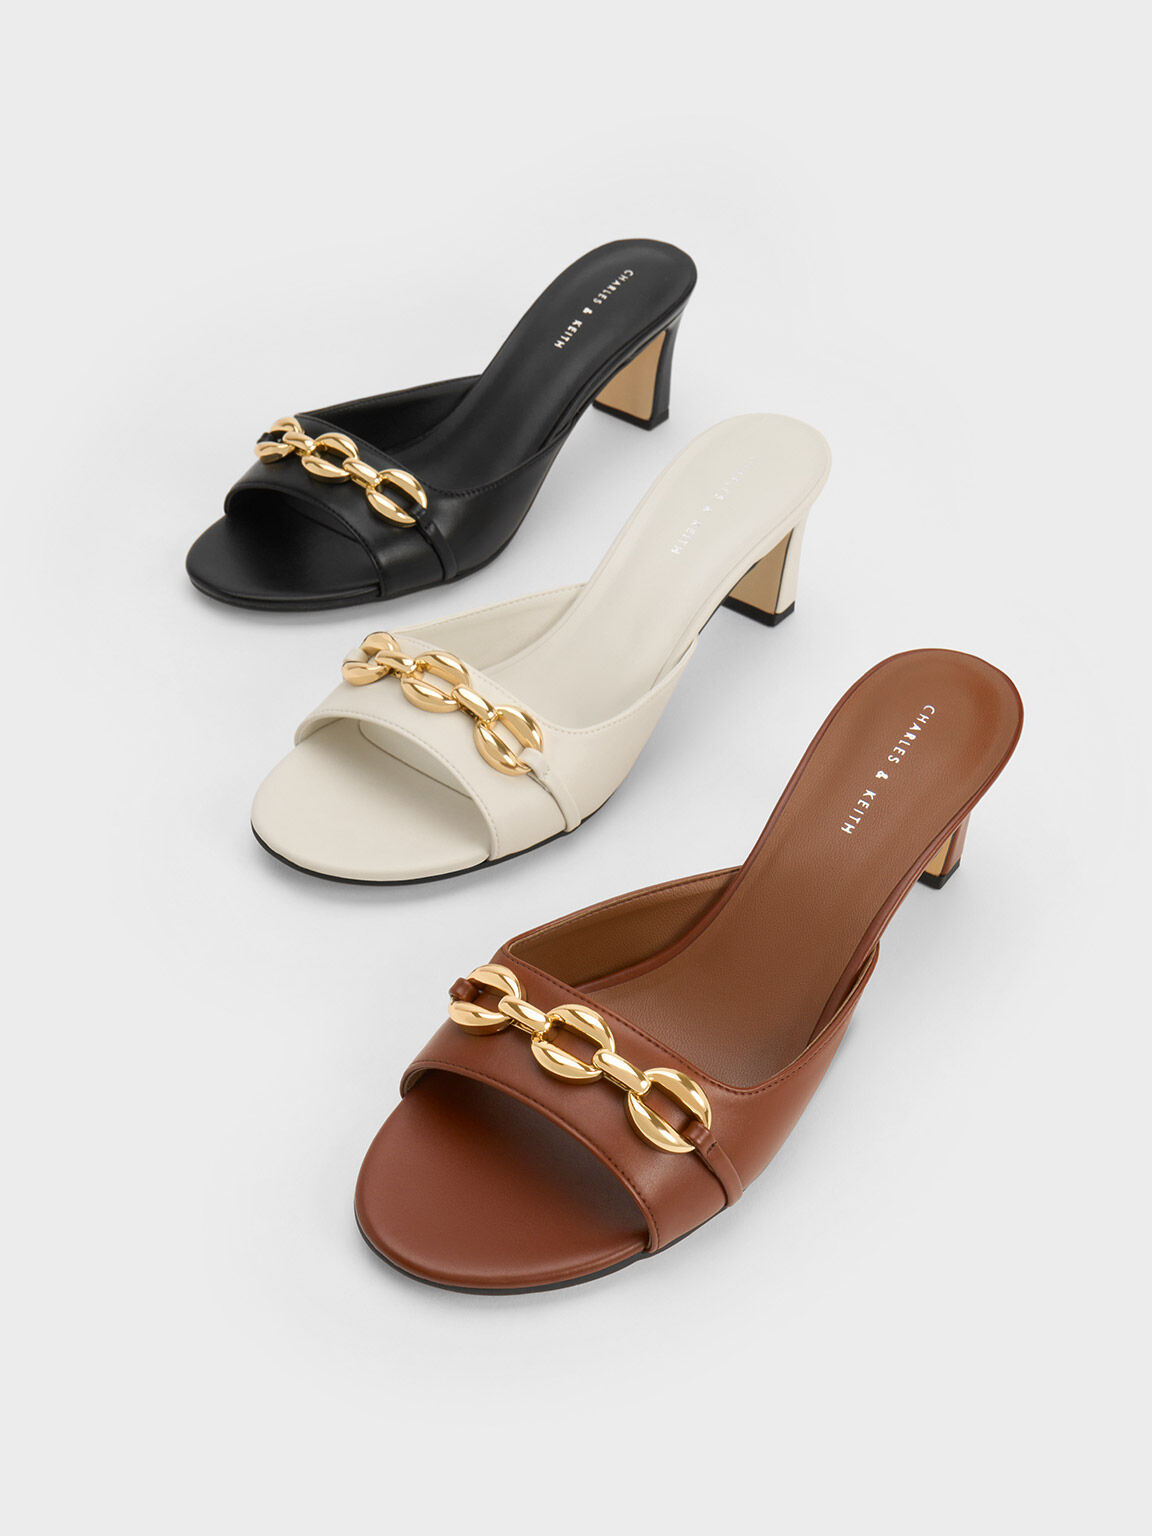 Black Ankle-Strap Heeled Sandals - CHARLES & KEITH OM